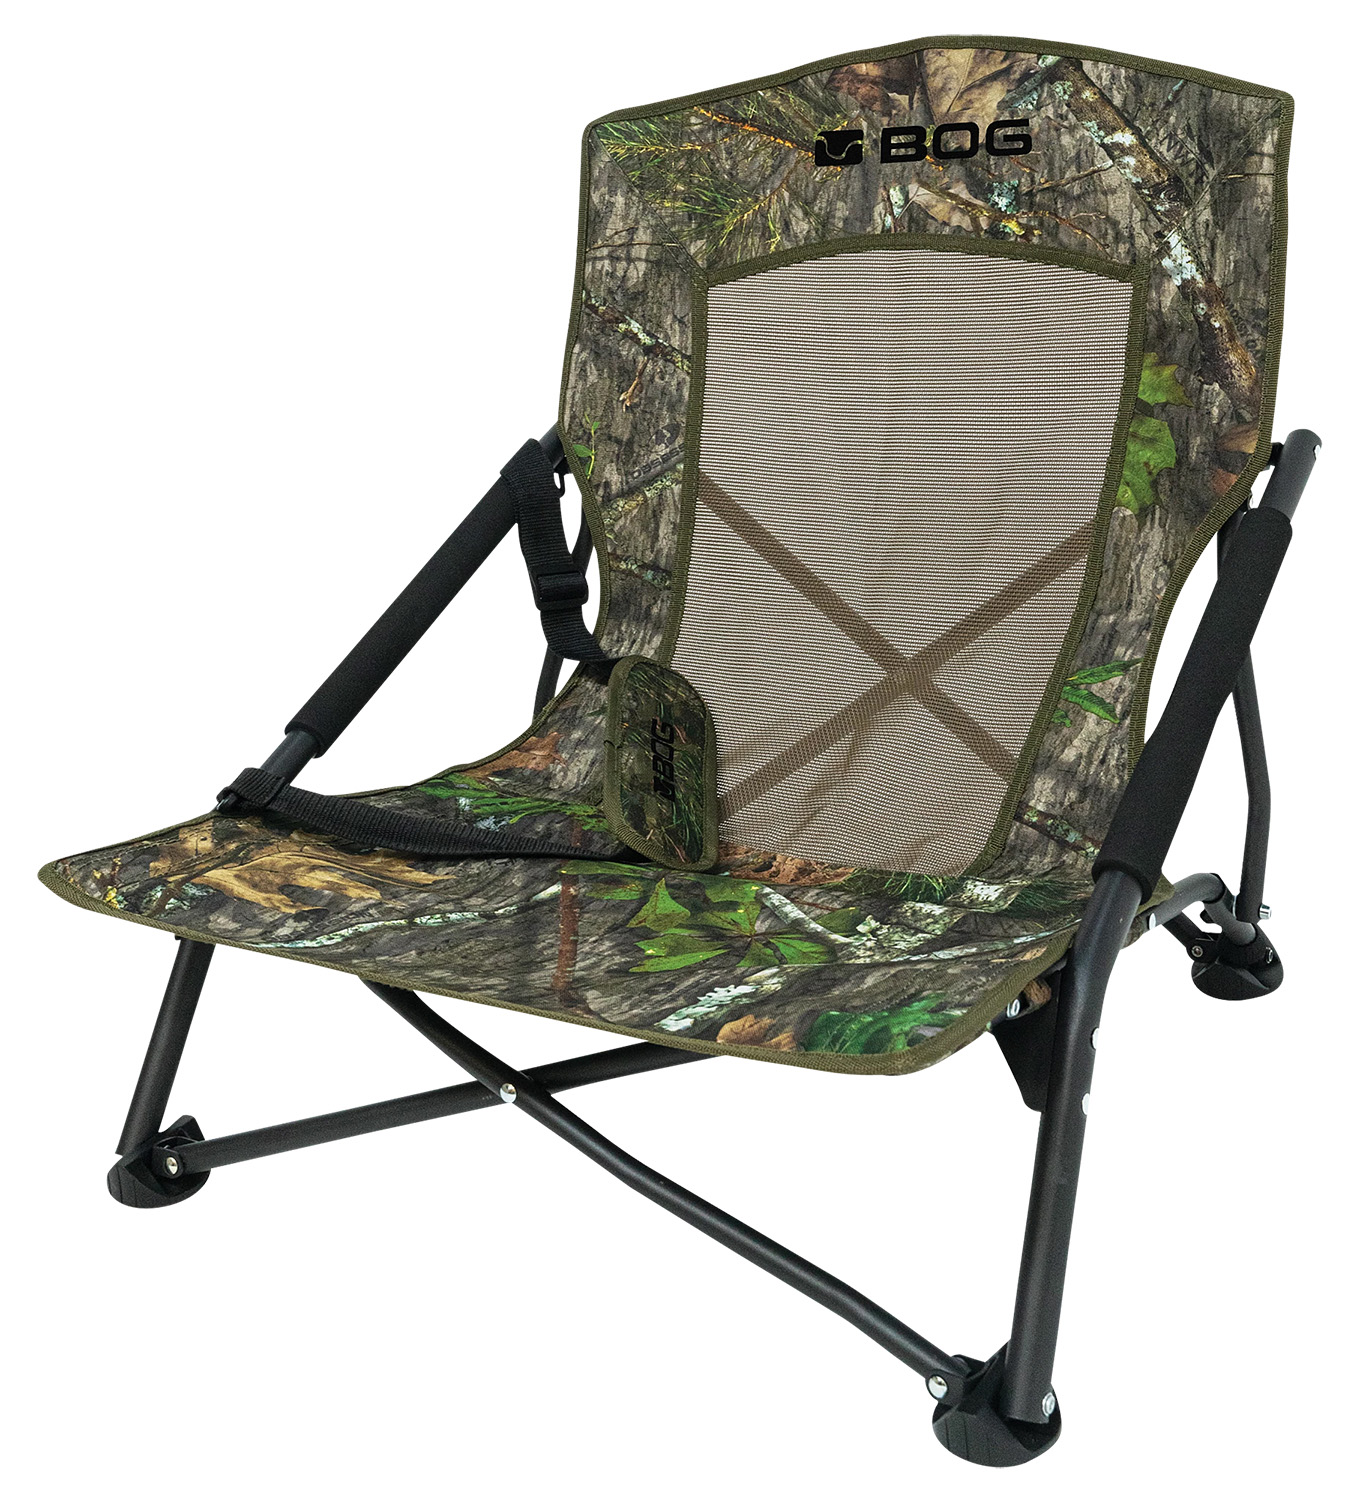 Bog-Pod 1134444 Snood Low-Profile Chair, 4 Legs, Mossy Oak Camo, Steel Frame, Carry Strap